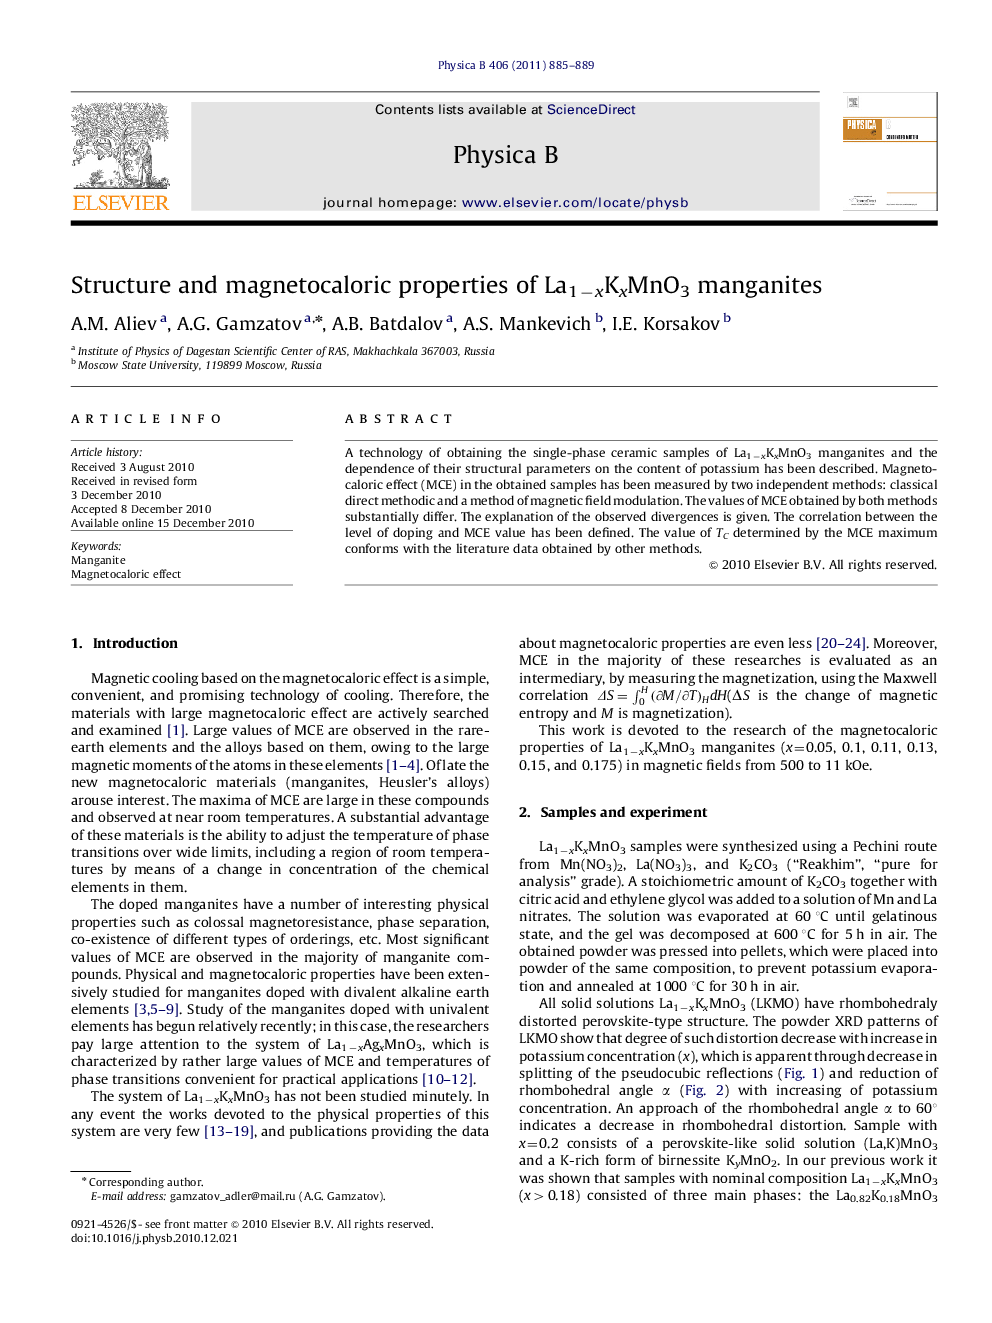 Structure and magnetocaloric properties of La1−xKxMnO3 manganites